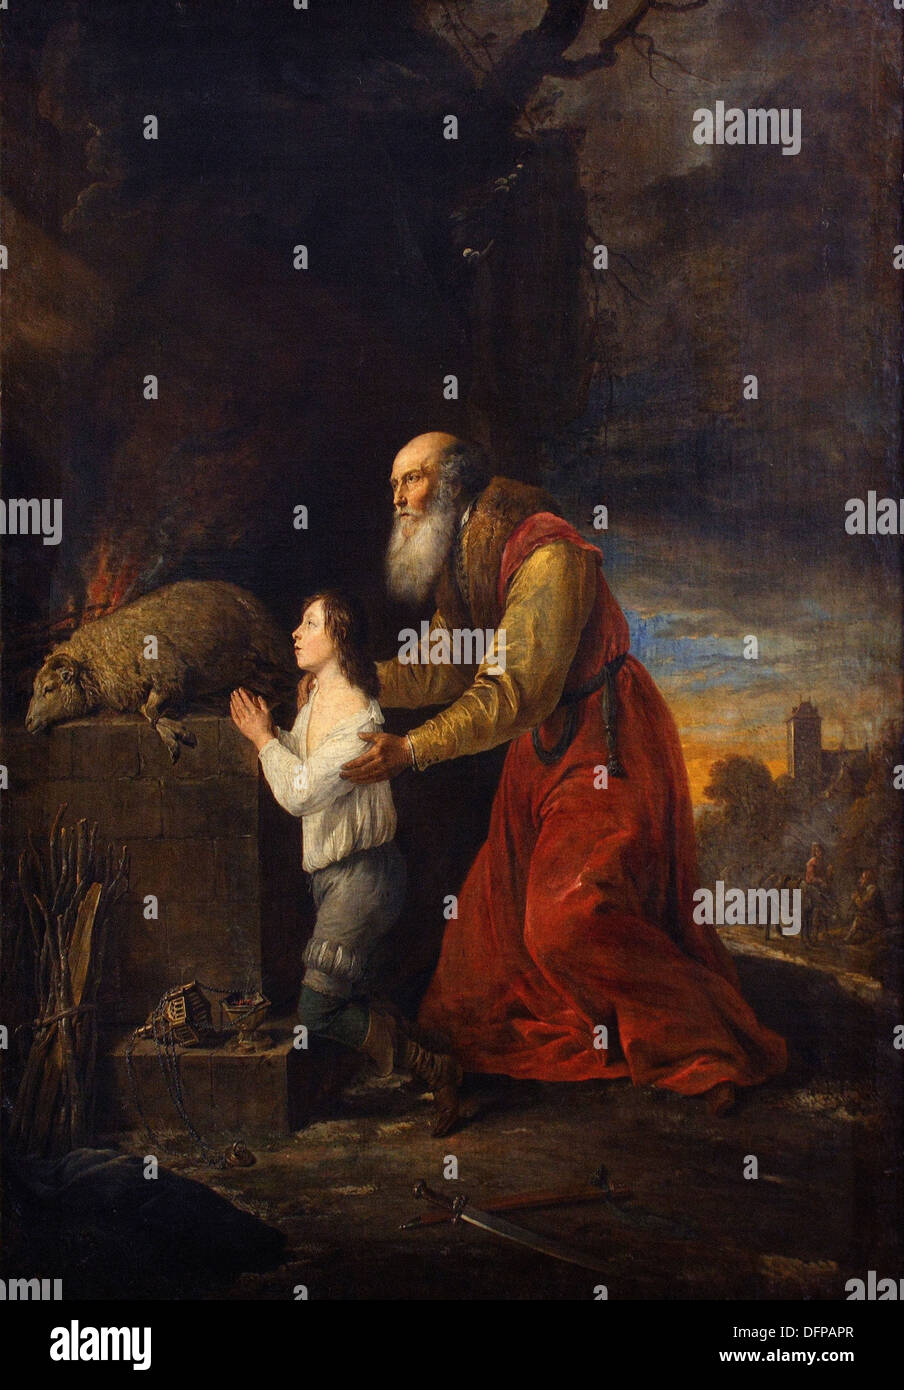 David TENIERS - Abraham´s Offering of Thanks - 1653 - Kunsthistoriches Museum - Vienna Stock Photo